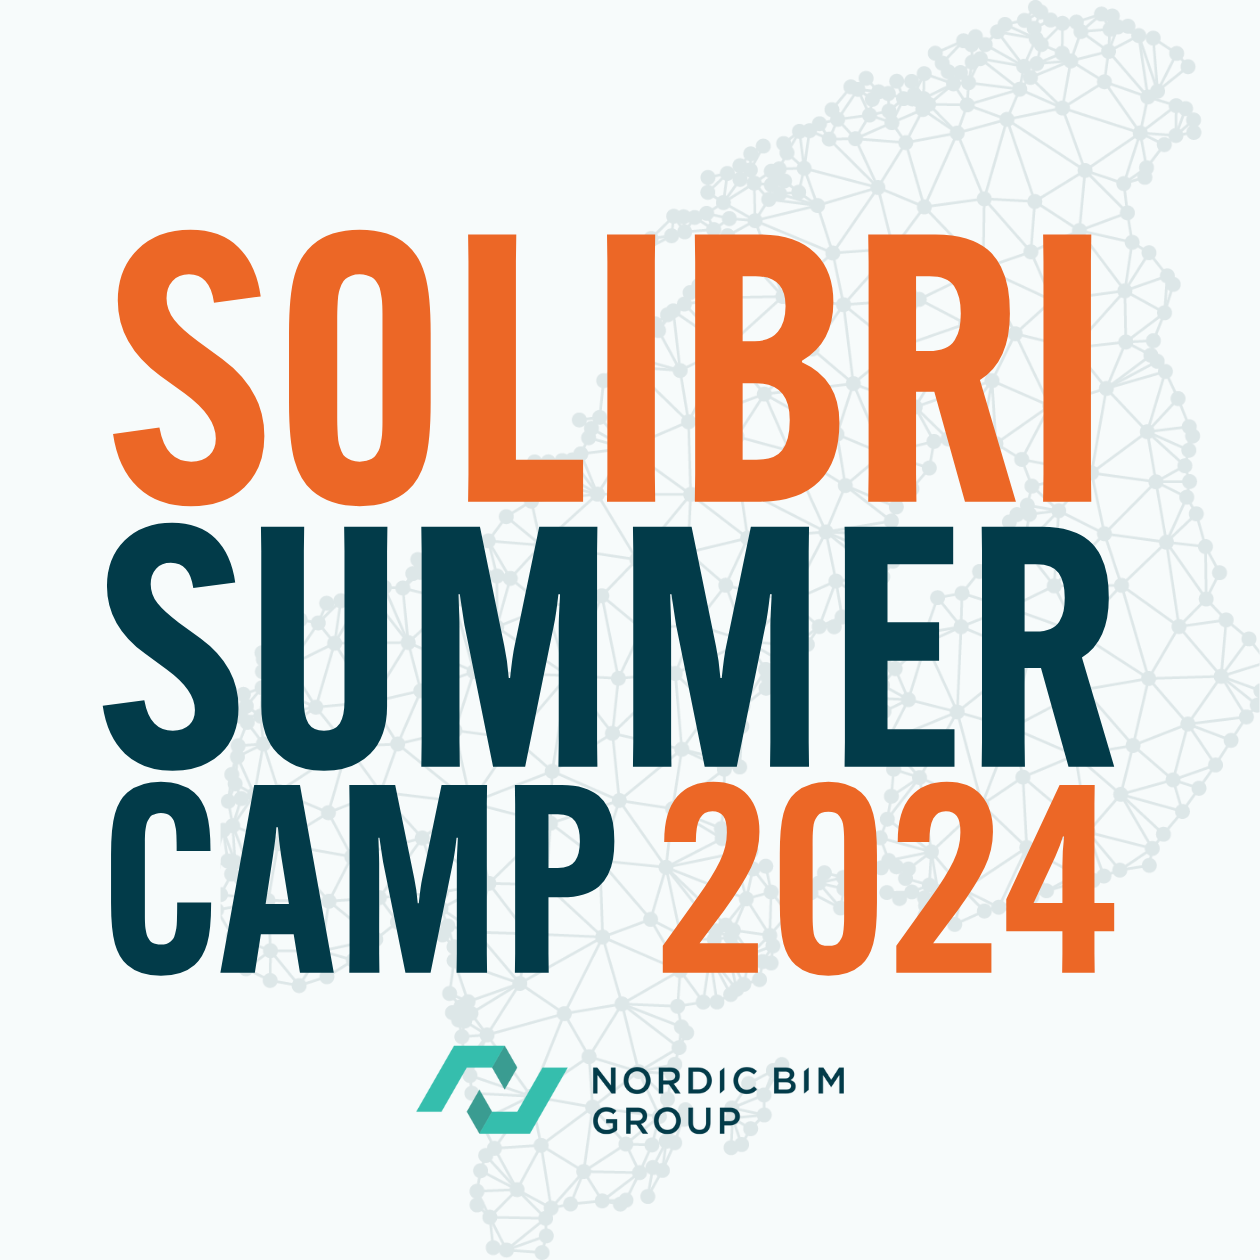 630x630 Solibri summer camp 2023